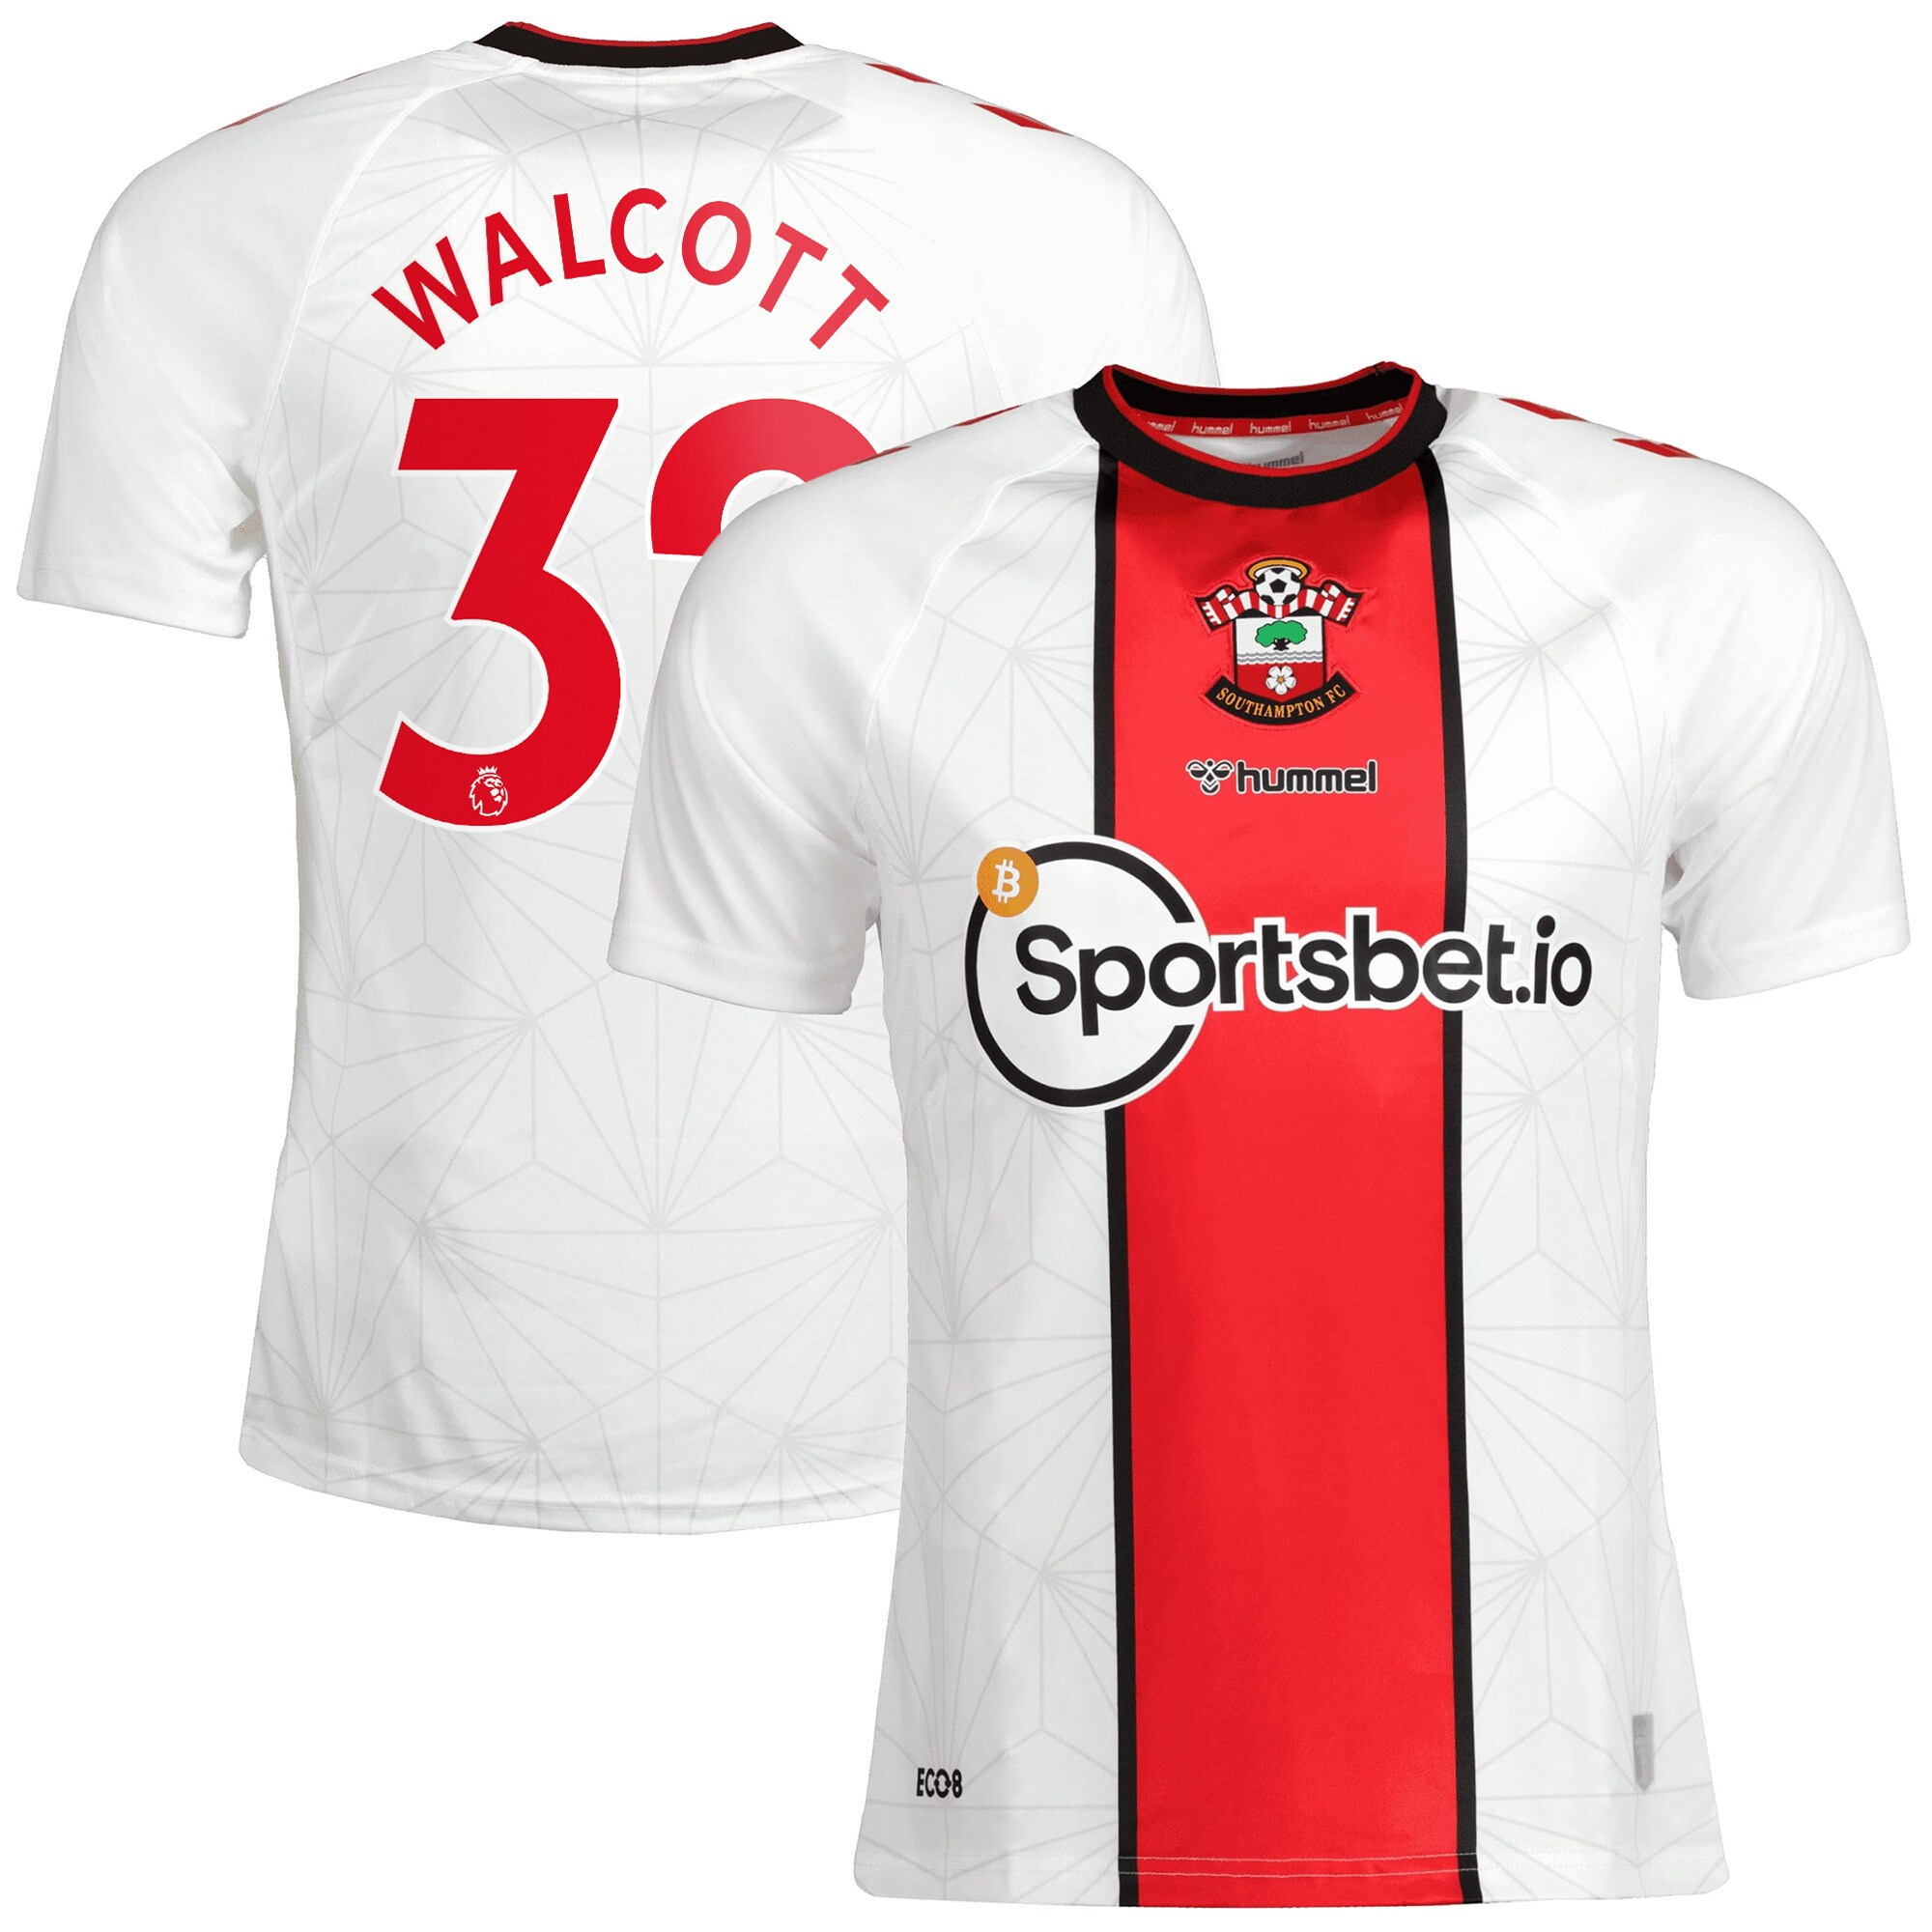 Southampton Home Shirt 2022-2023 with Walcott 32 printing